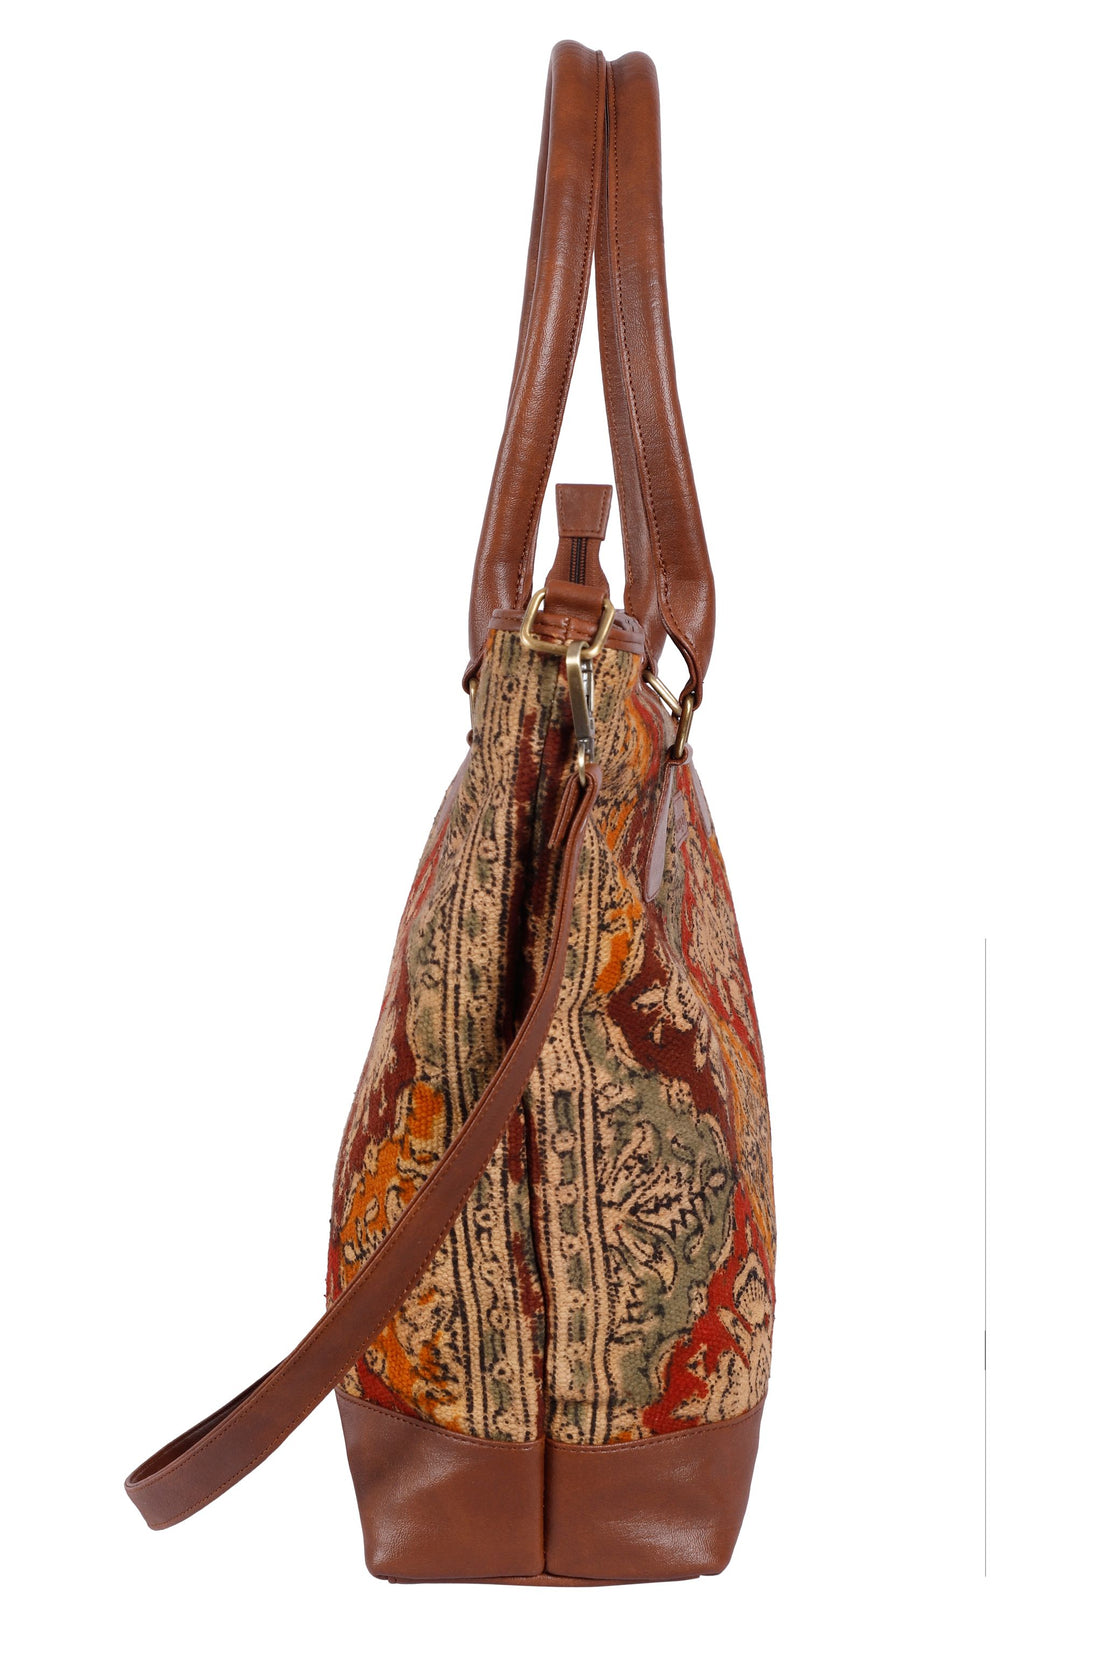 Block print vegan leather bag, hand woven kilim shoulder bag,large tote bag with zipper, vegan gift, organic cotton fabric tote